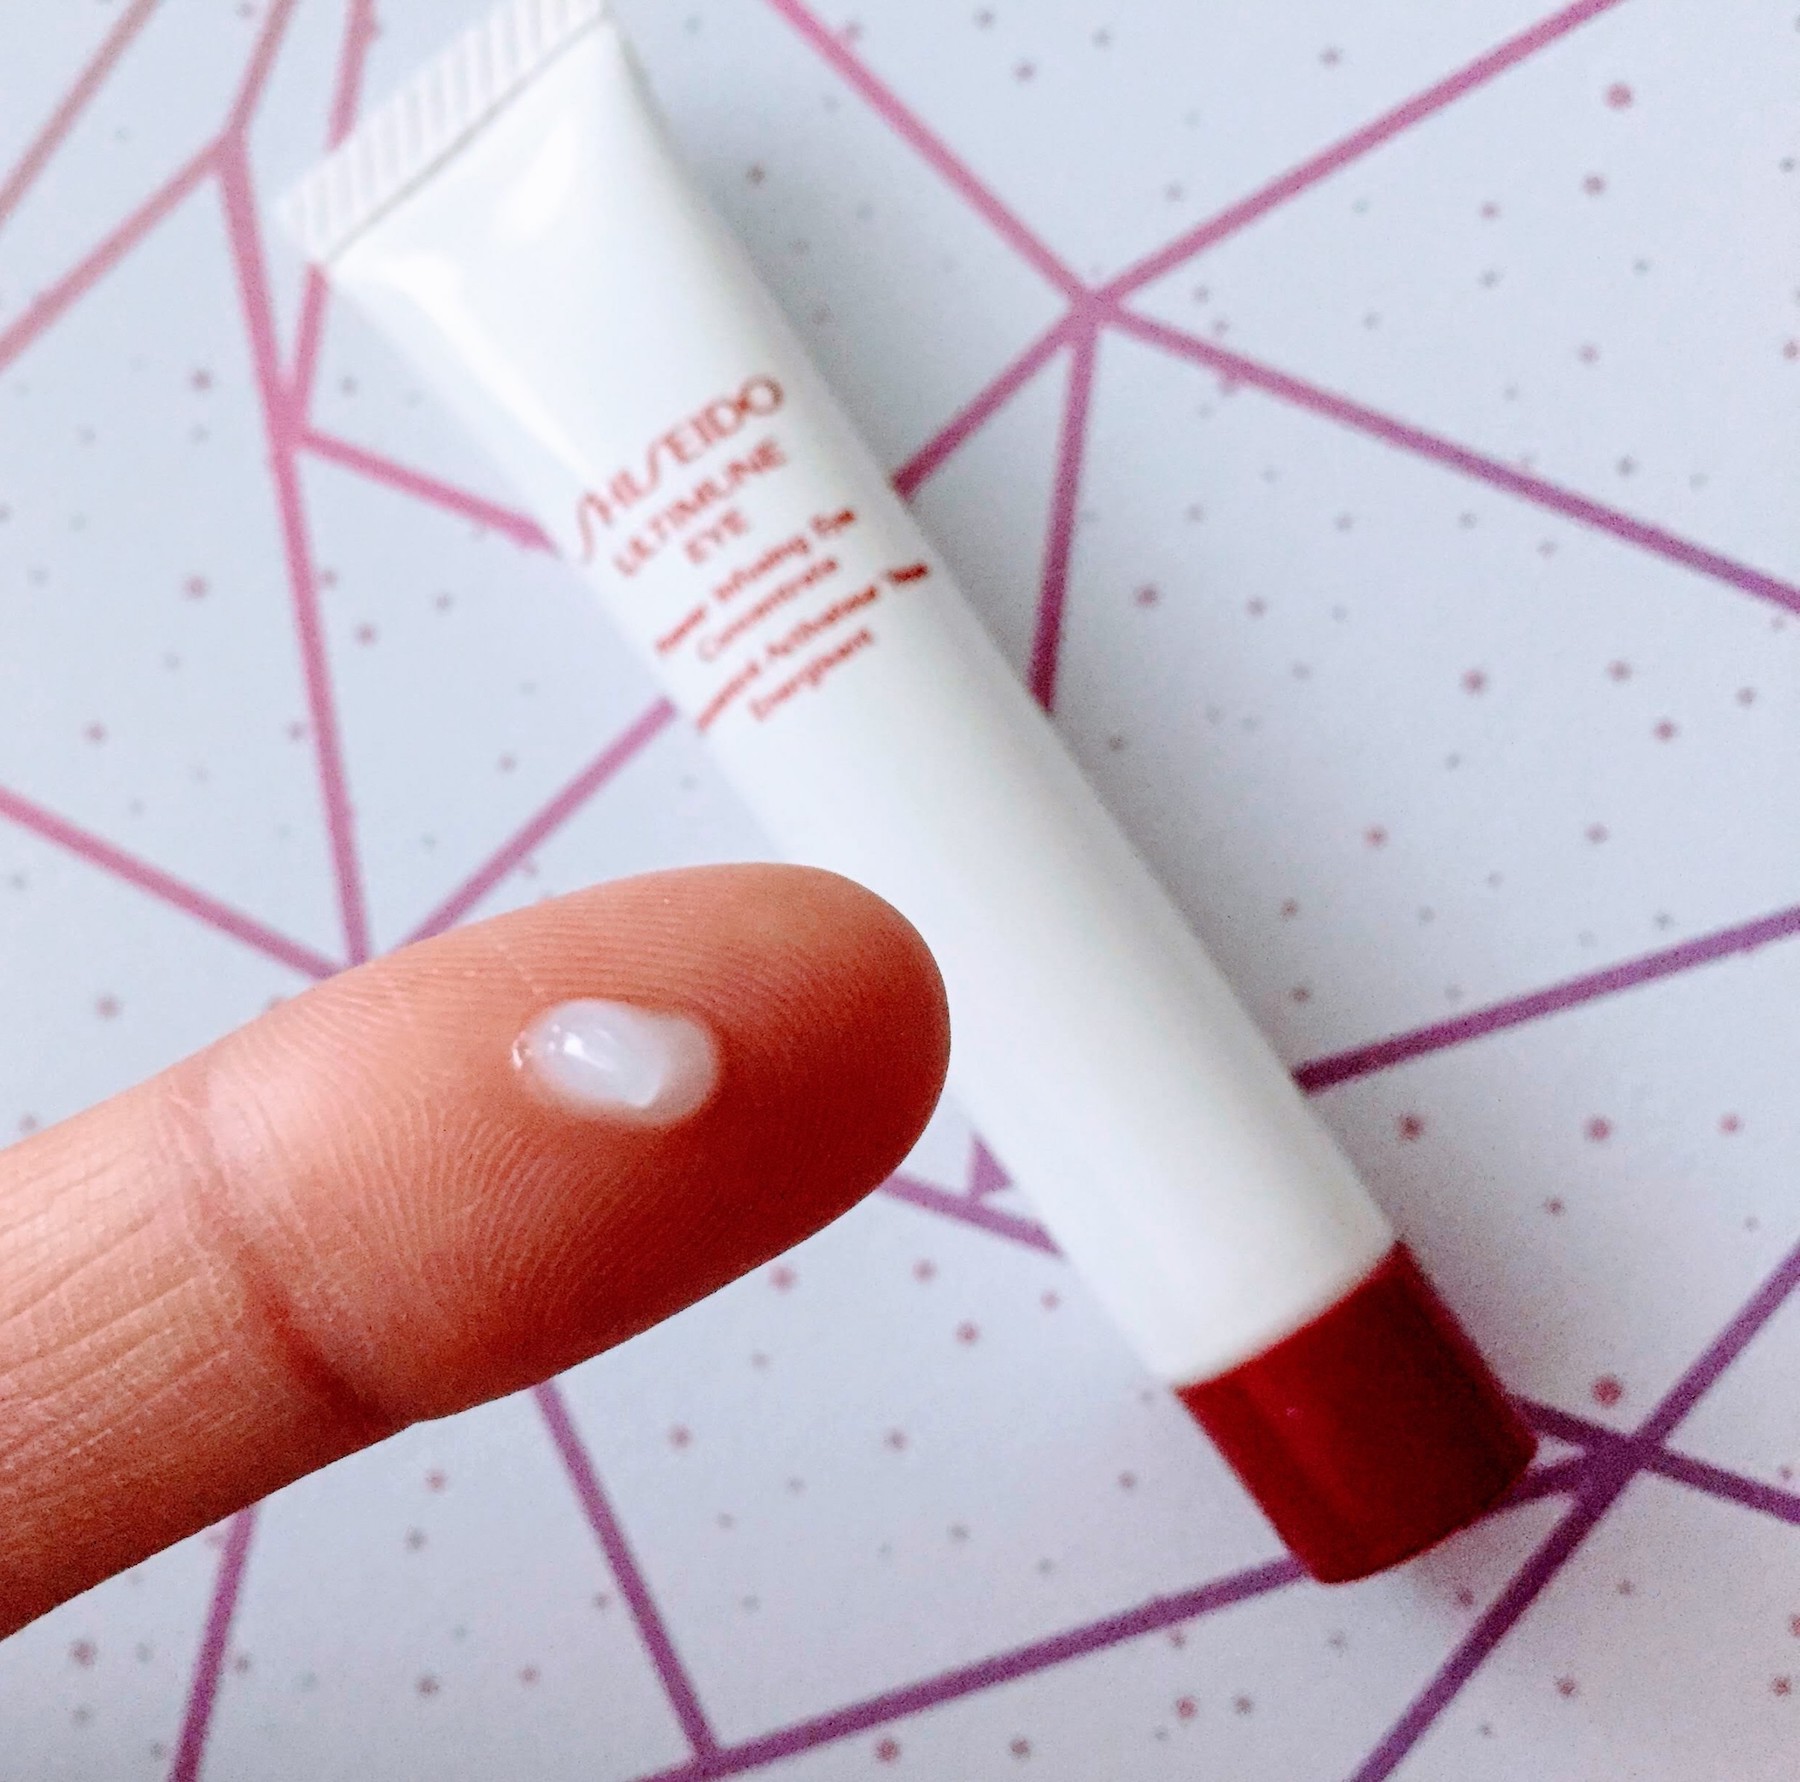 Shiseido Ultimune Eye Cream review - texture viscosity